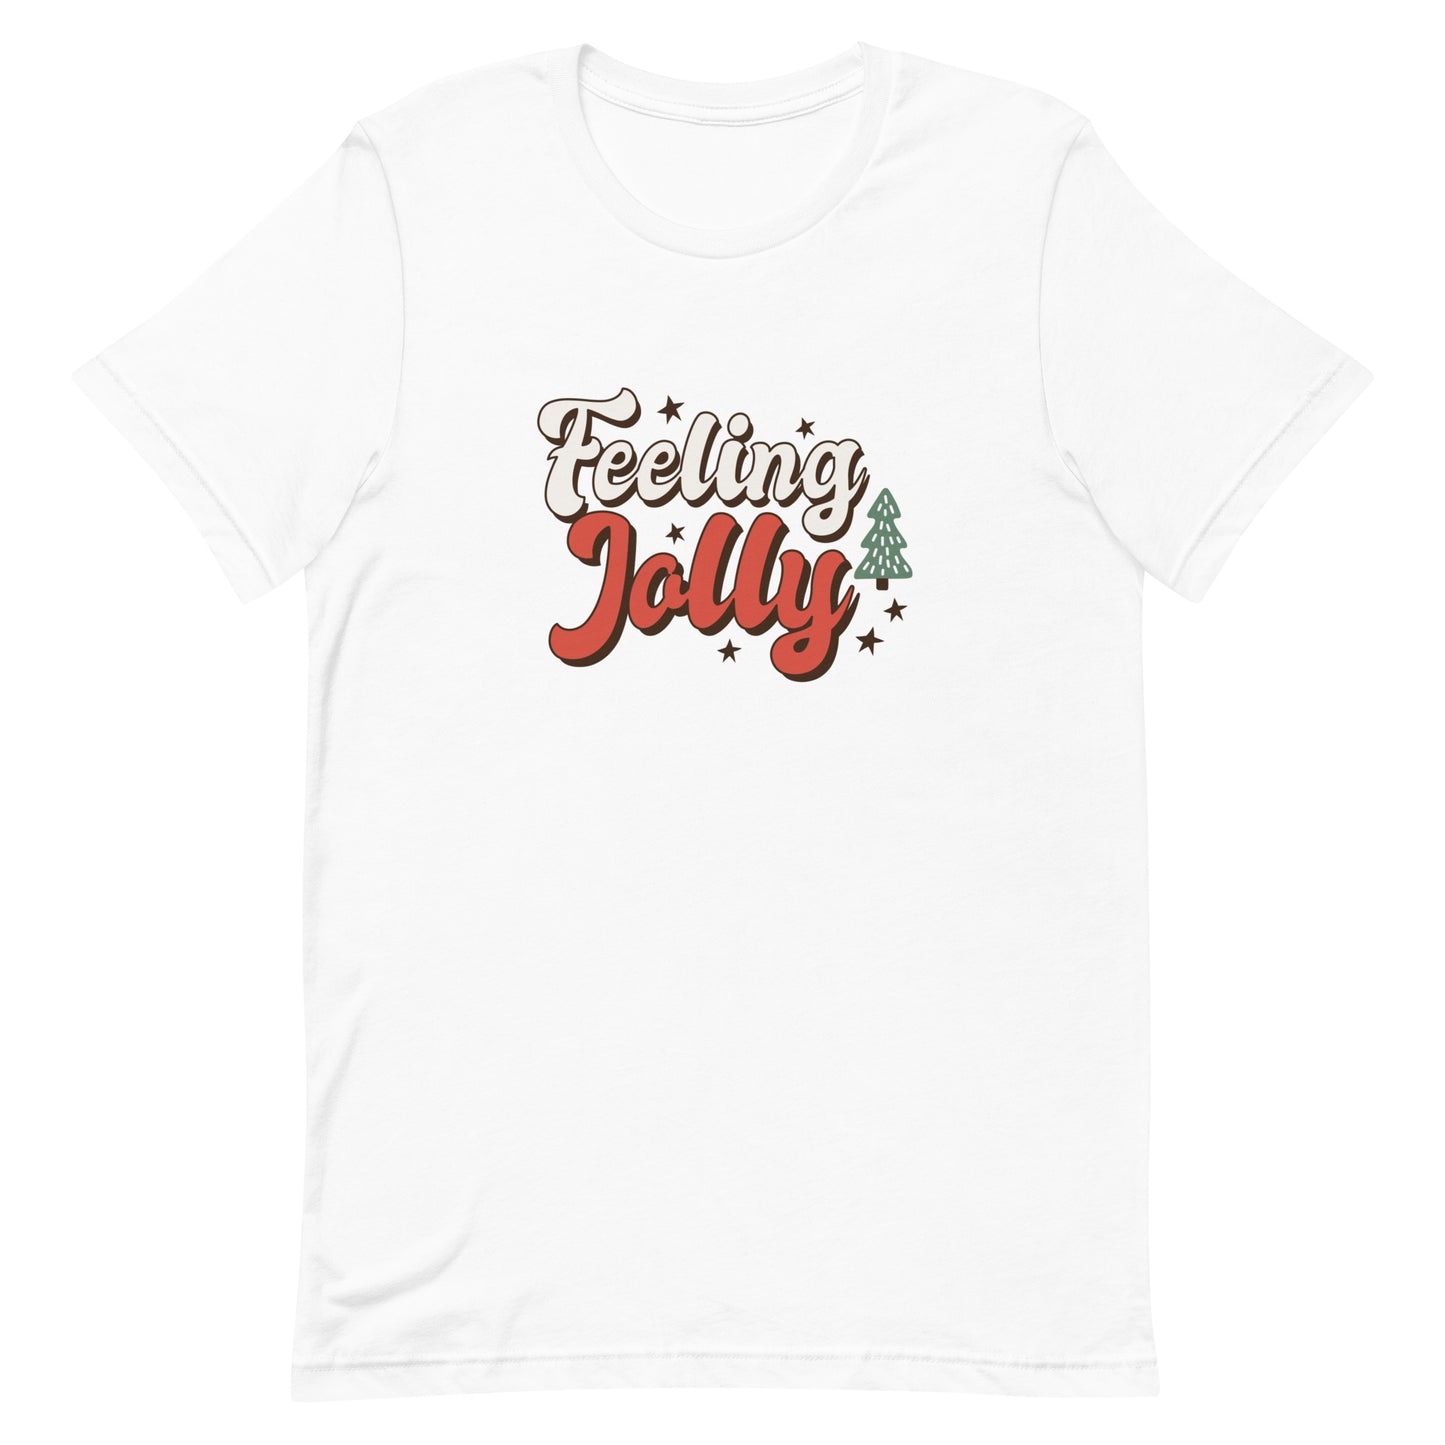 Feeling Jolly Unisex T-shirt